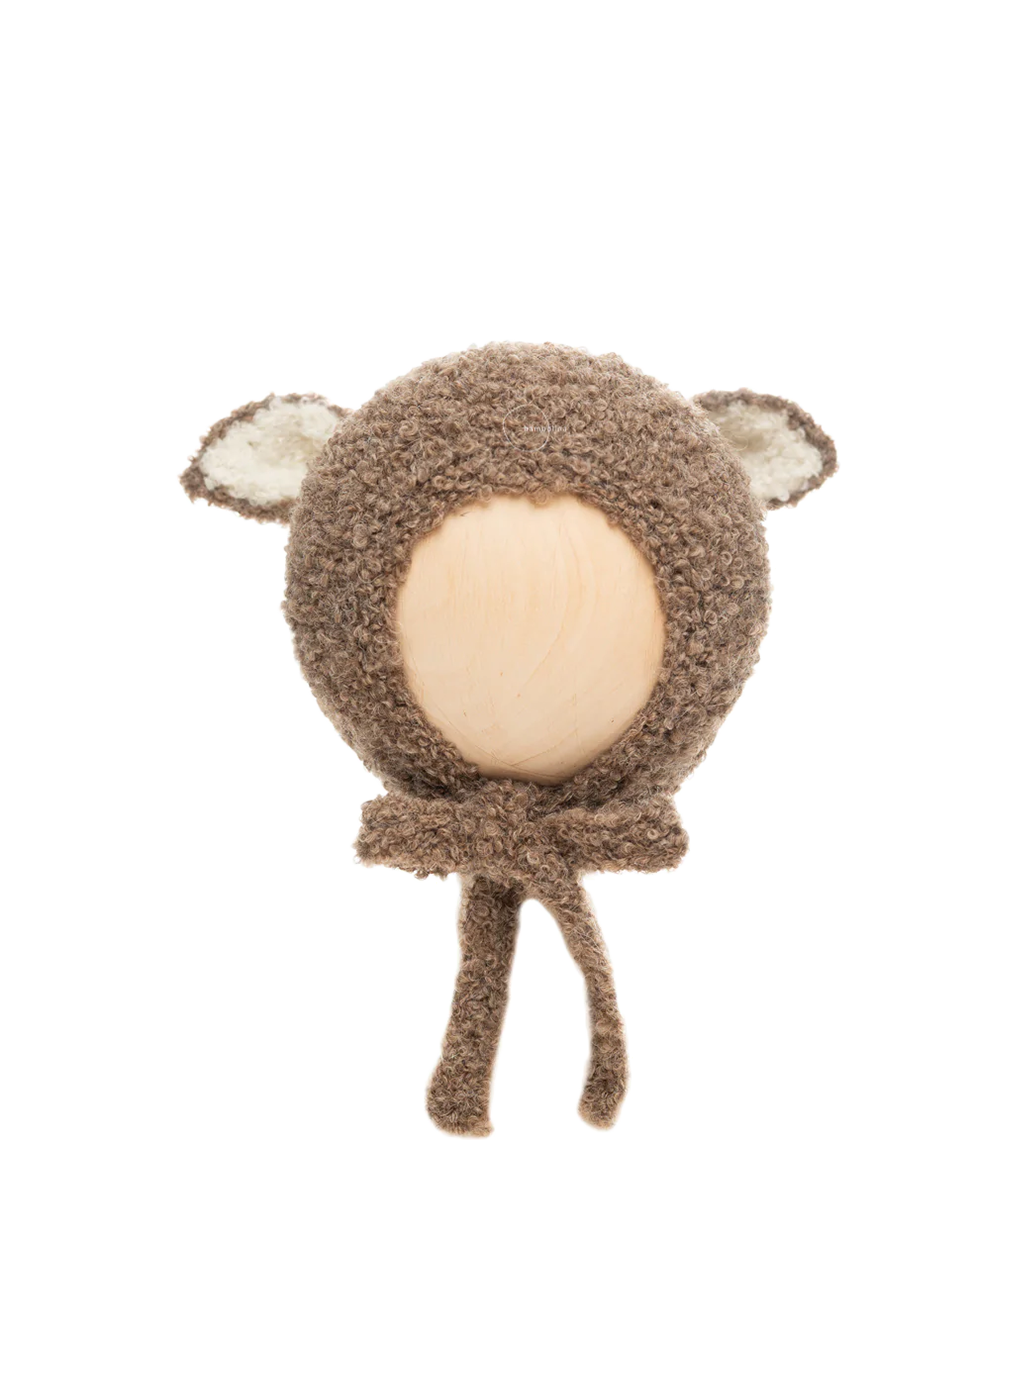 Sheep bonnet